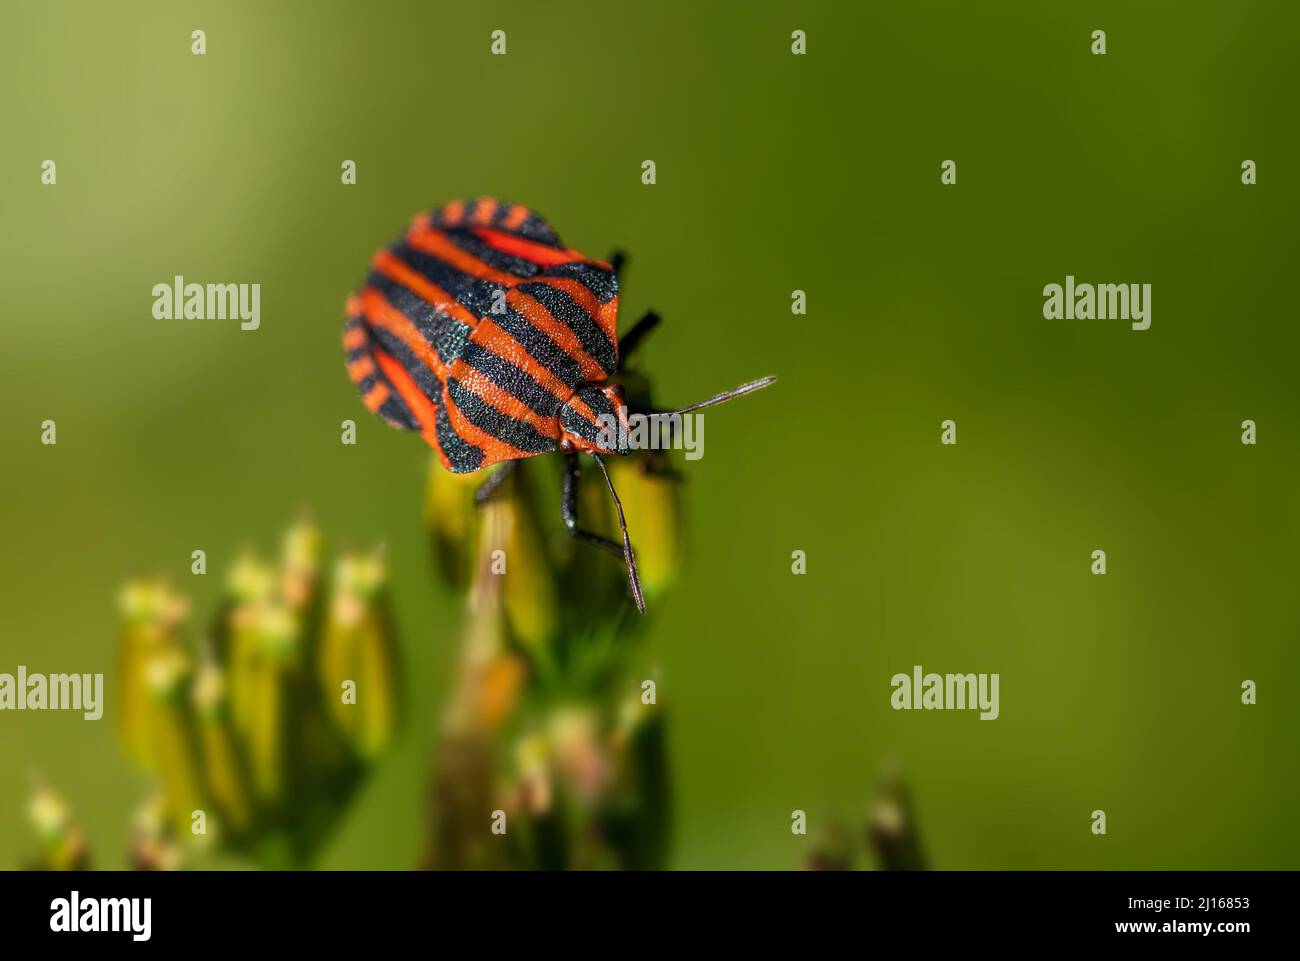 Italian striped bug - Graphosoma italicum, beautiful colored bug from European meadows and grasslands, Czech Republic. Stock Photo